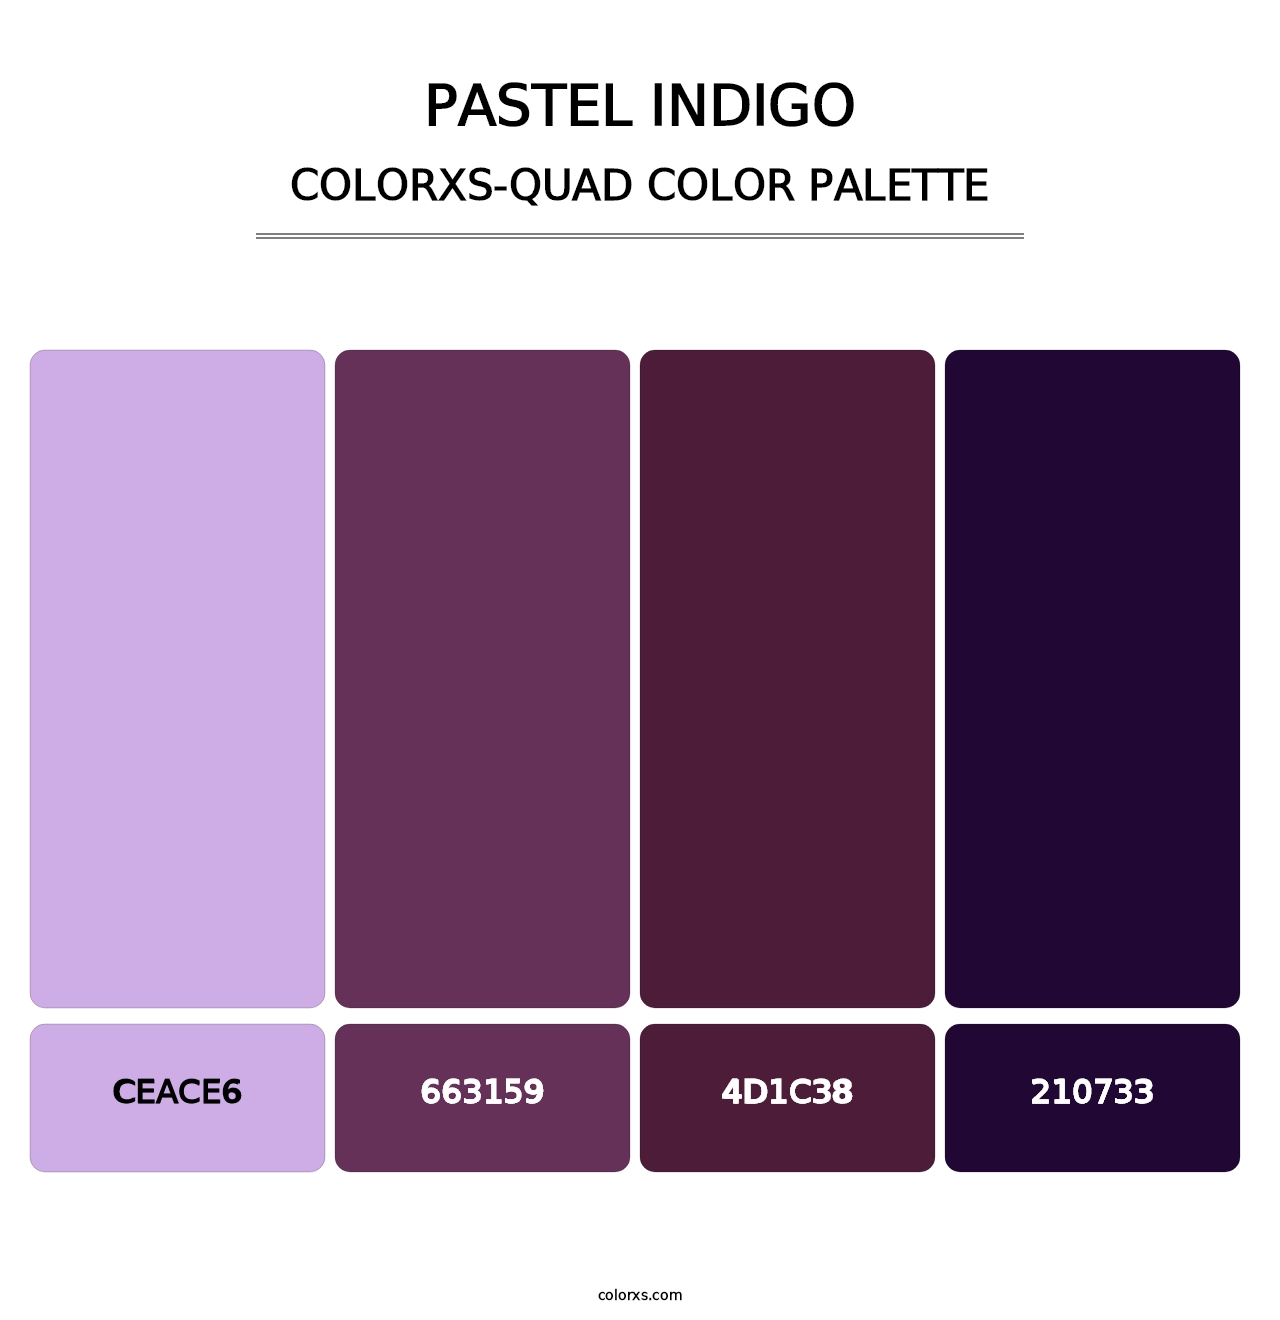 Pastel Indigo - Colorxs Quad Palette